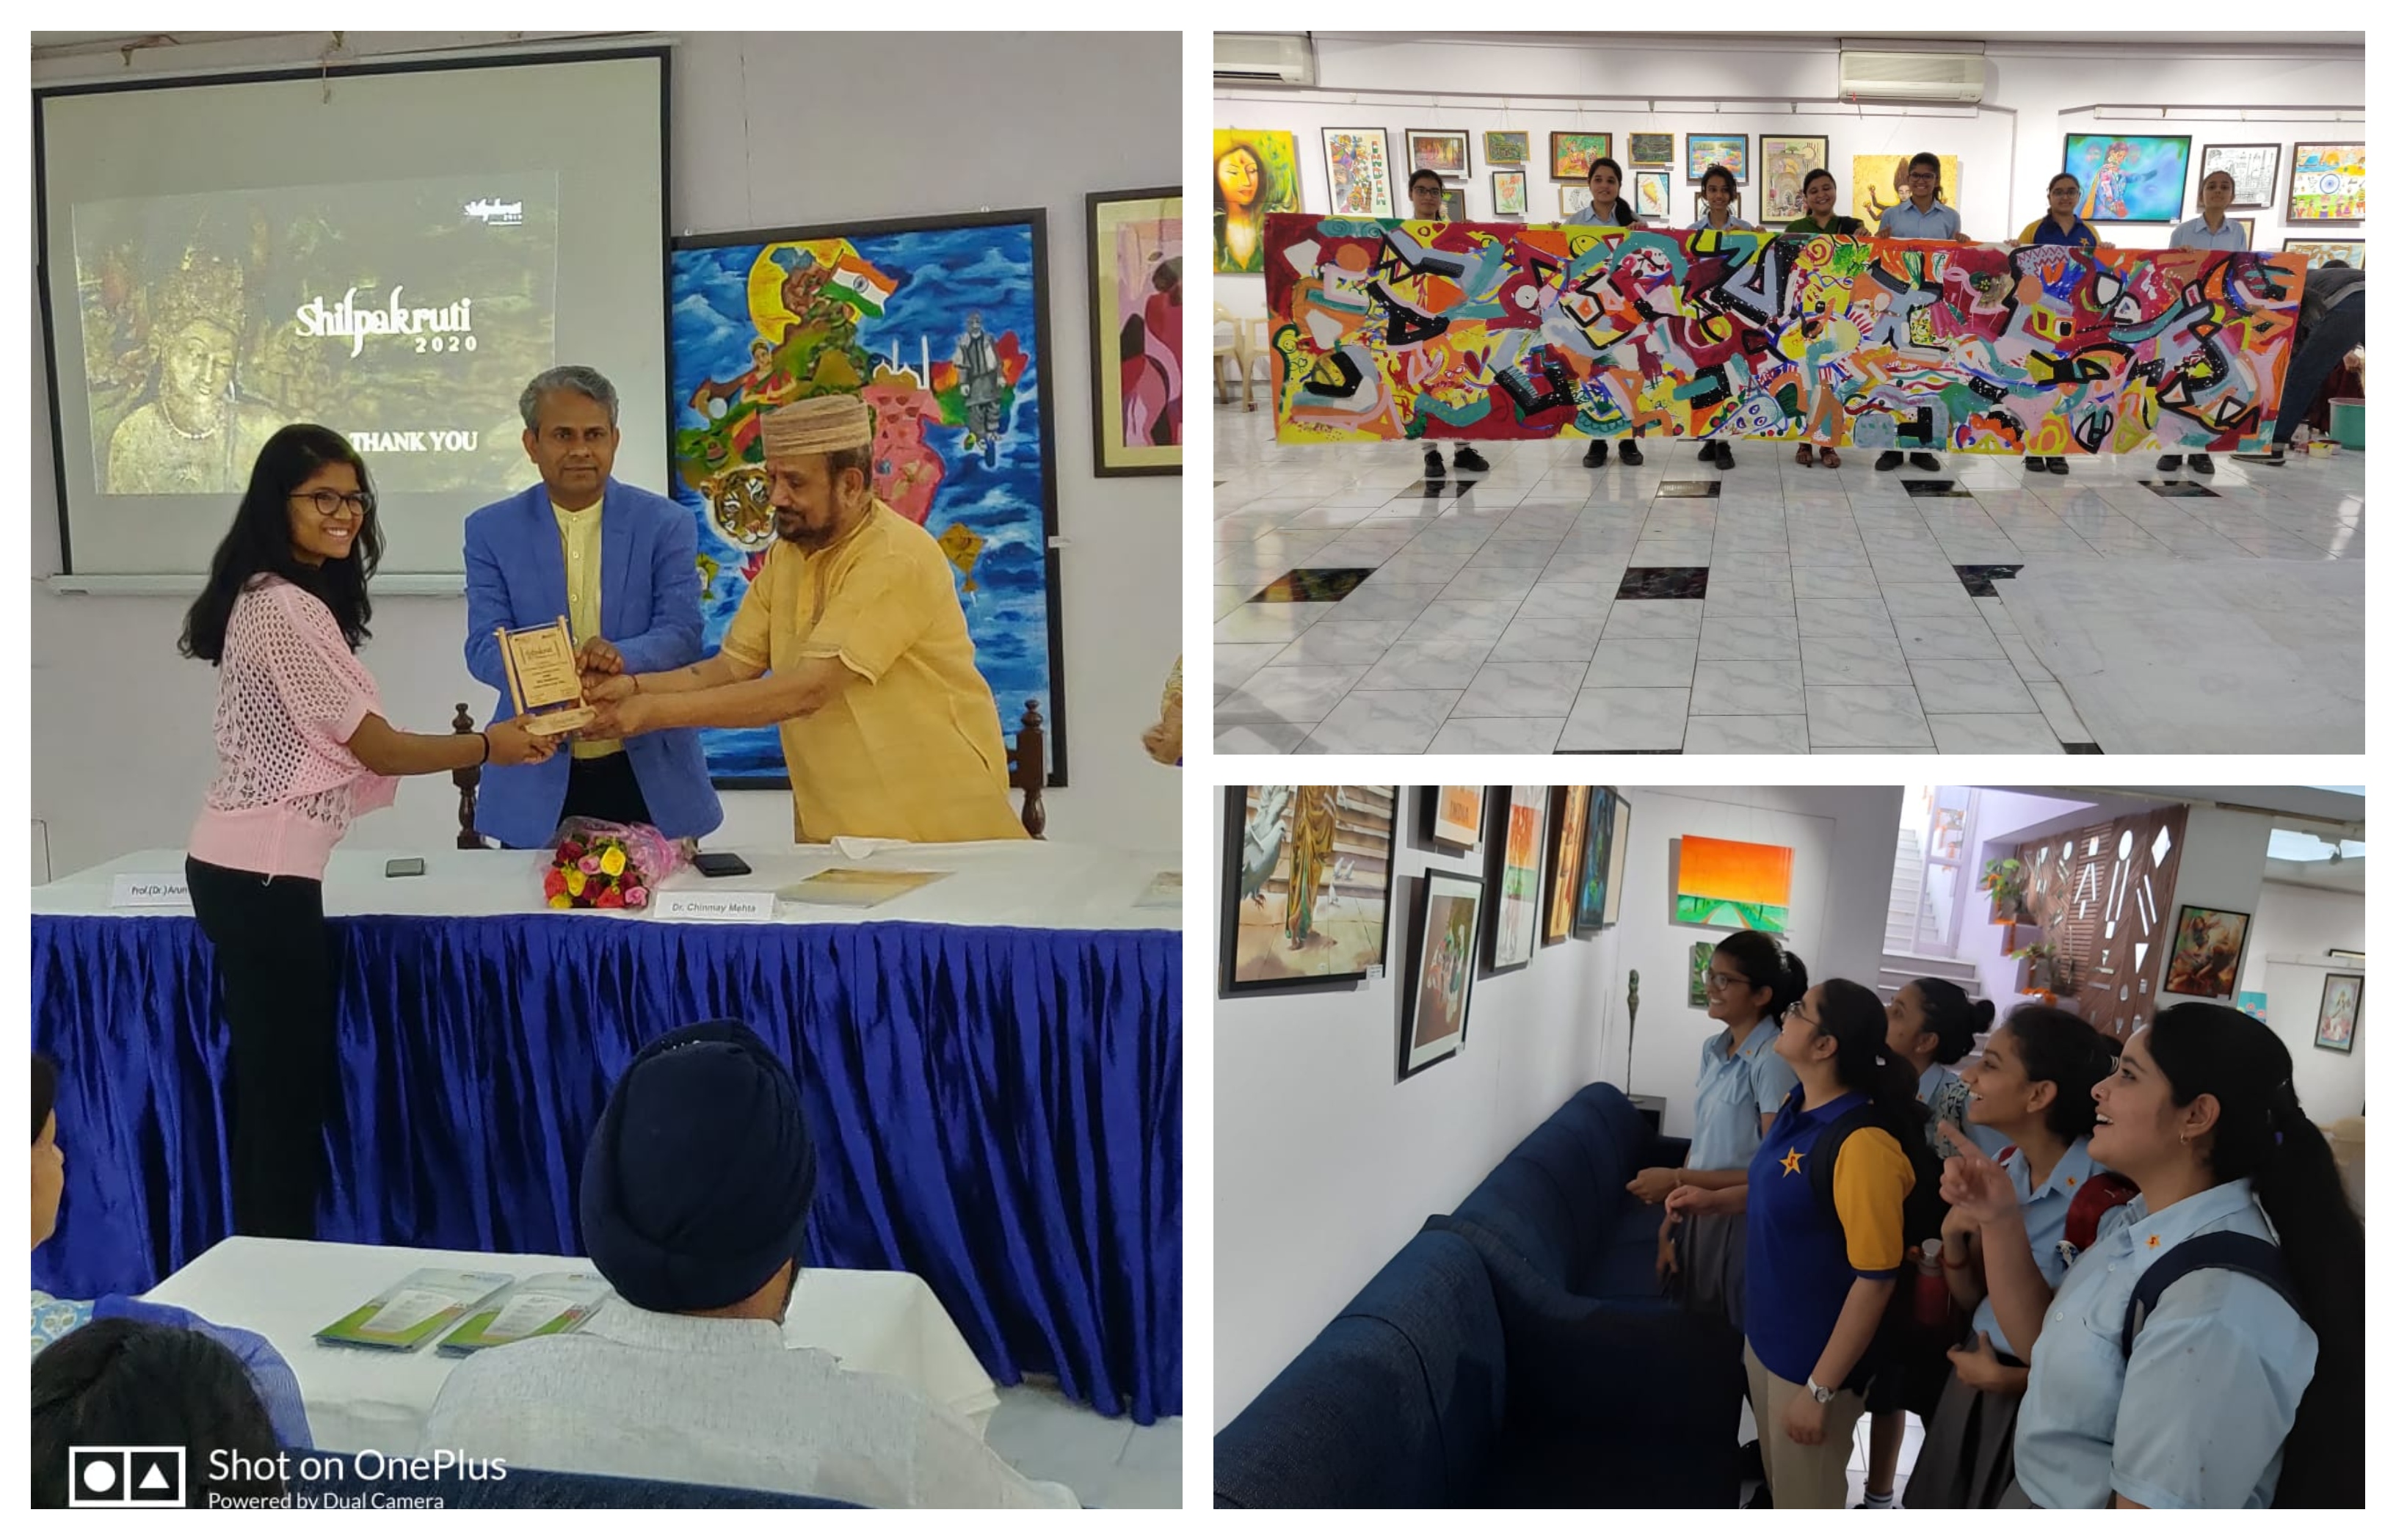 Sanskar student wins Painting Competition at Shilpakruti 2019